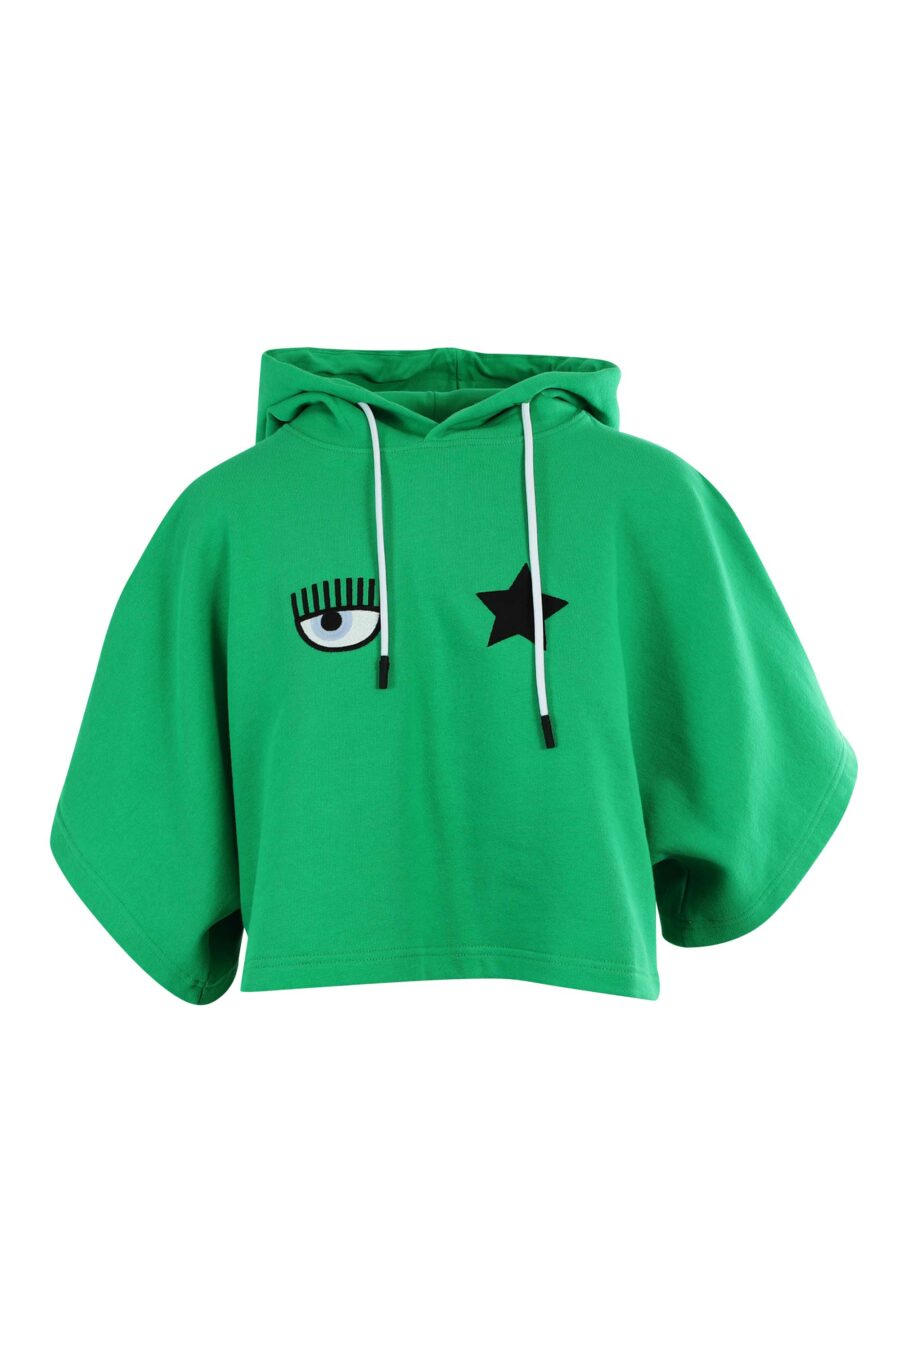 Green short sleeve hooded sweatshirt with eye and star logo - 8052672417961